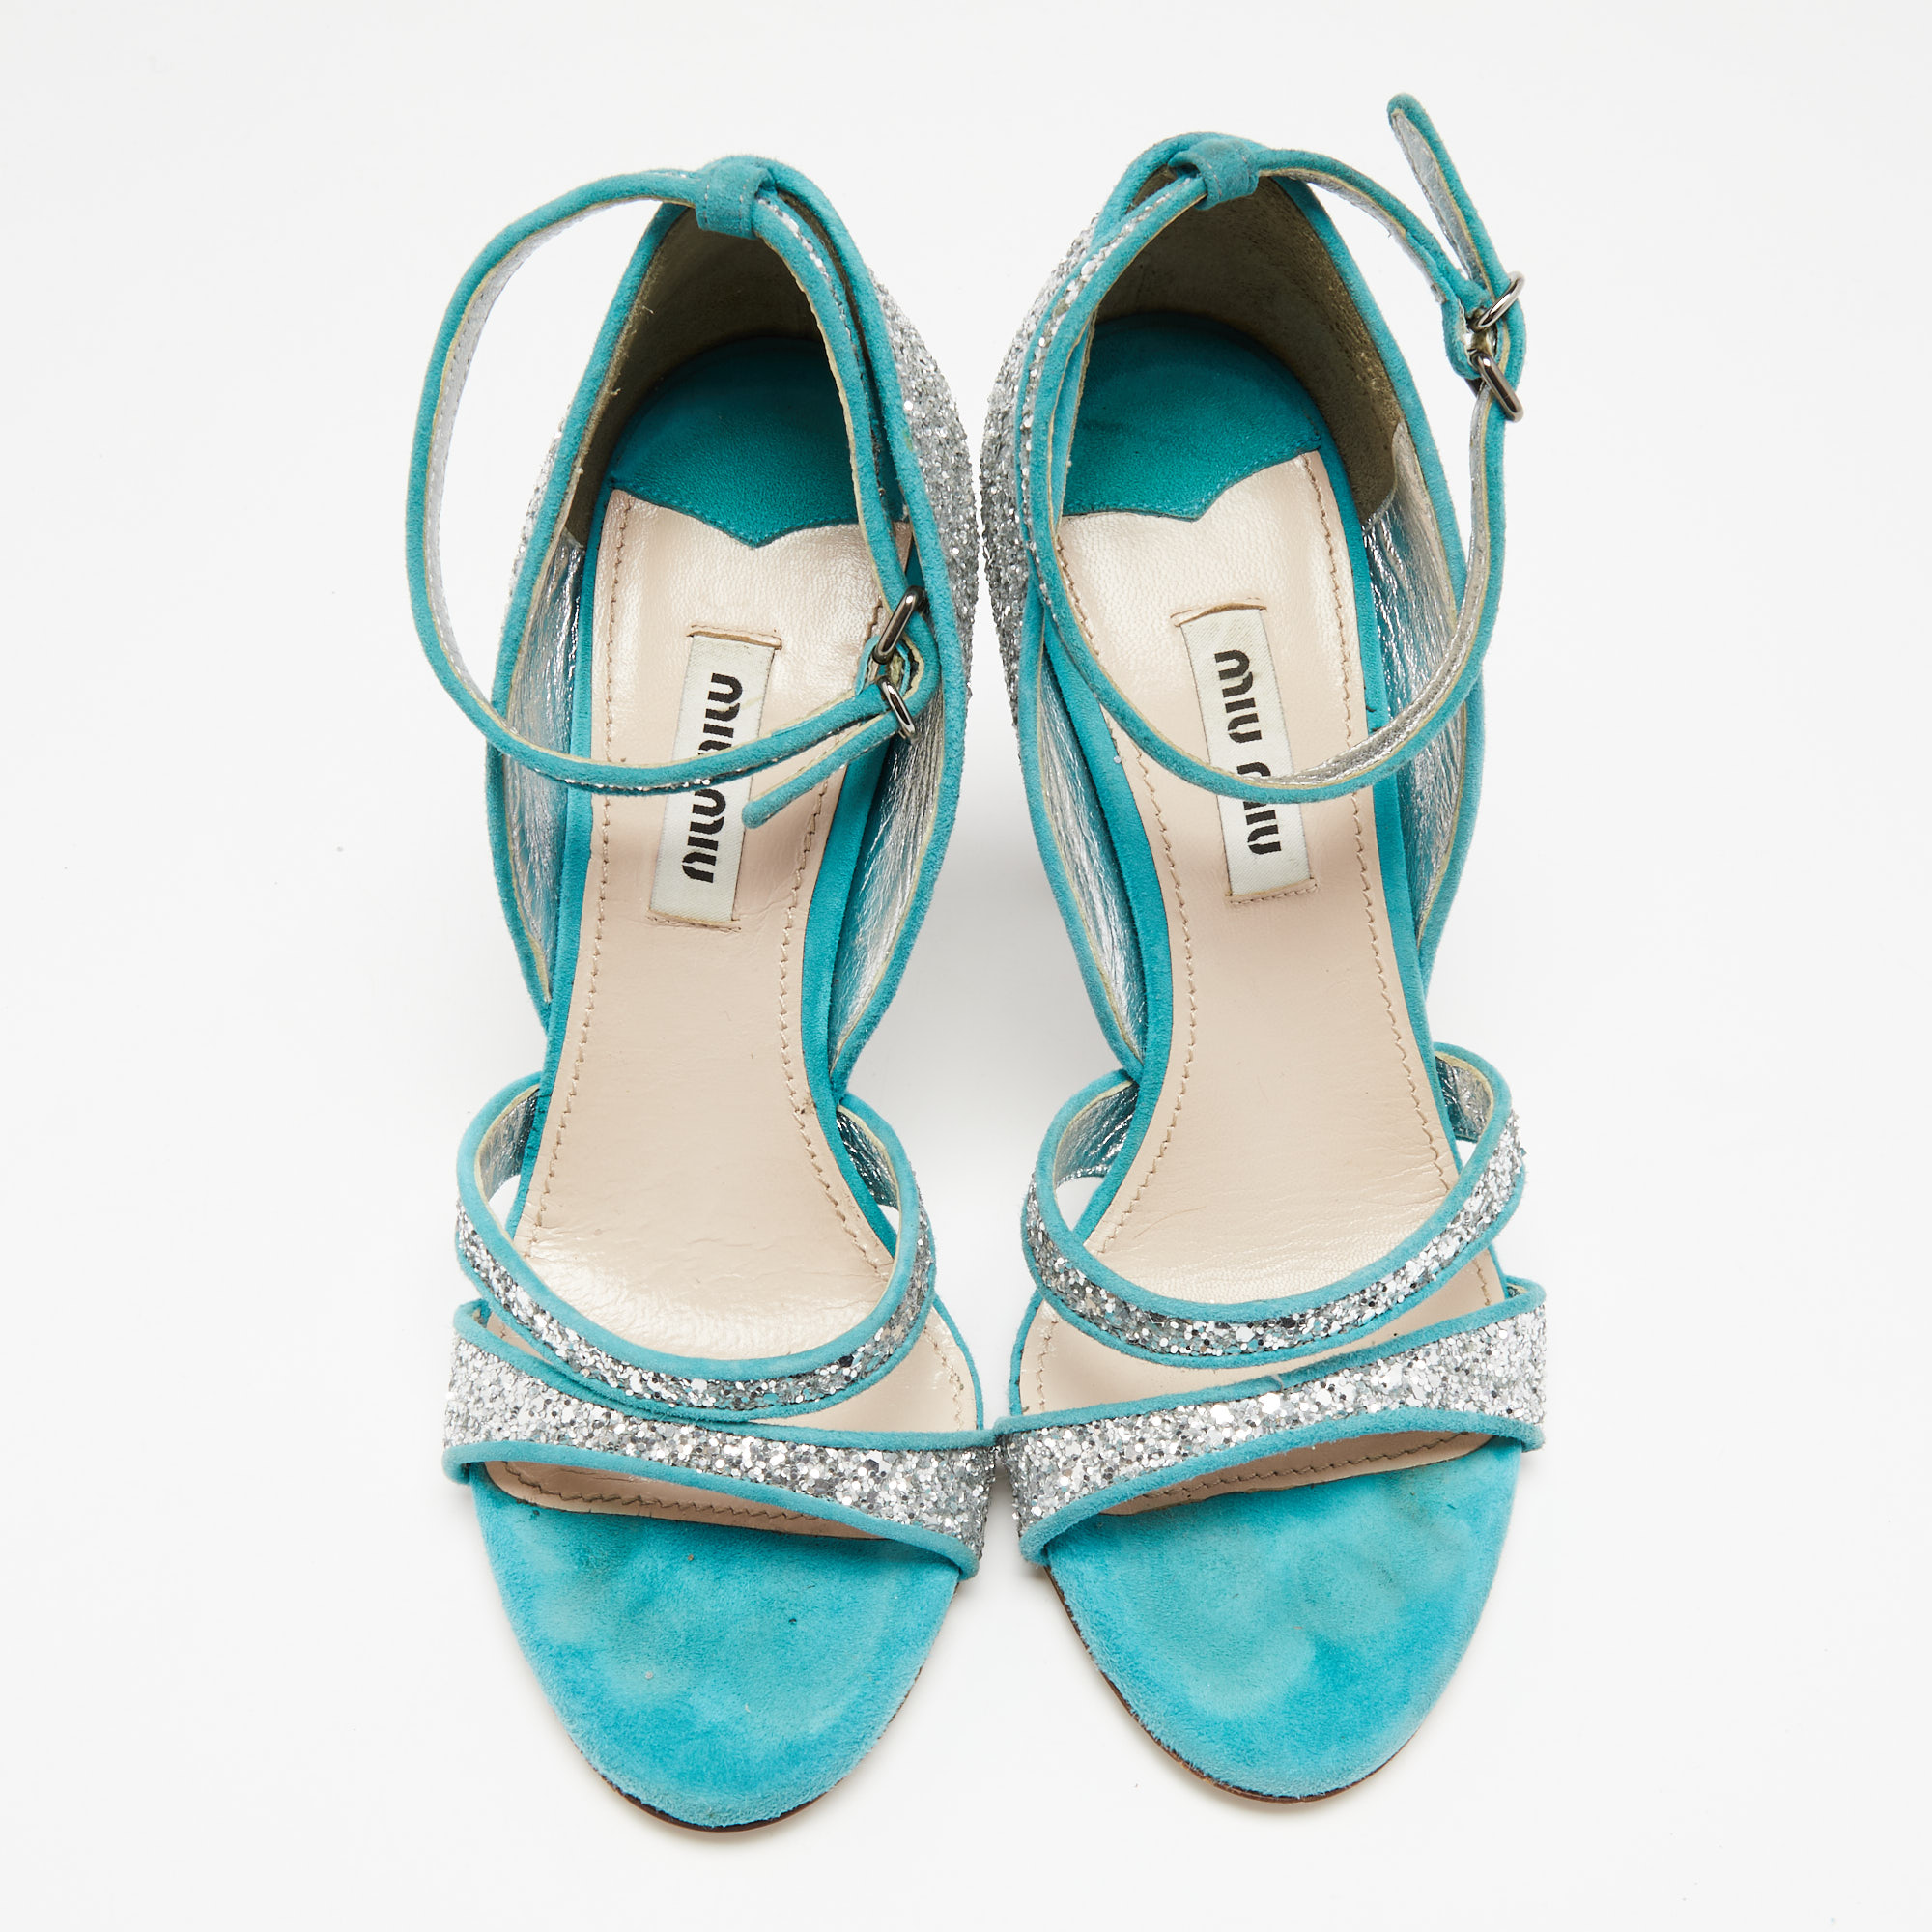 Miu Miu Silver/Blue Coarse Glitter And Suede Trims Open Toe Ankle Strap Sandal Size 35